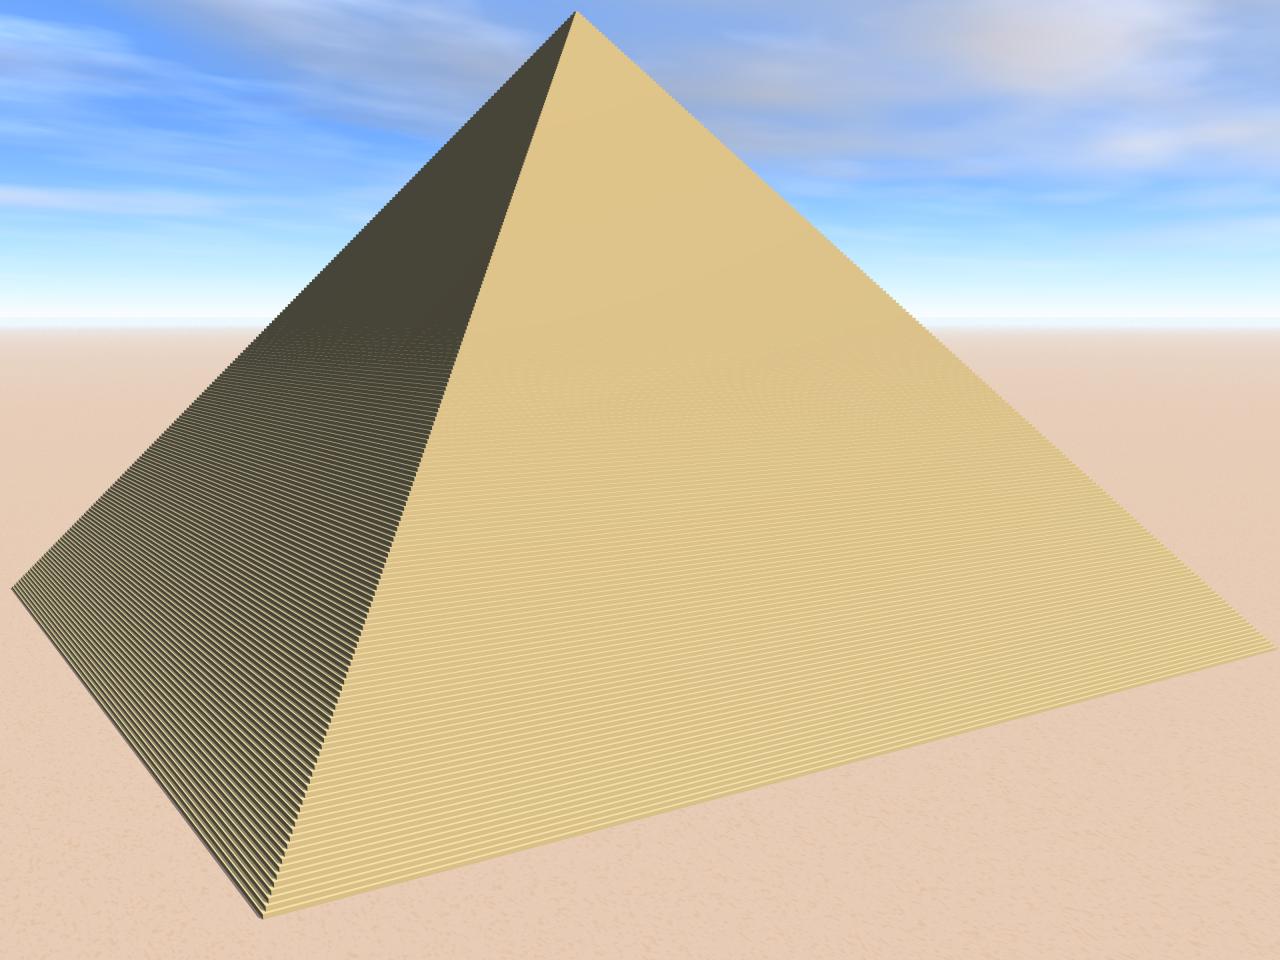 Nom : PyramideAA.jpg
Affichages : 205
Taille : 118,6 Ko